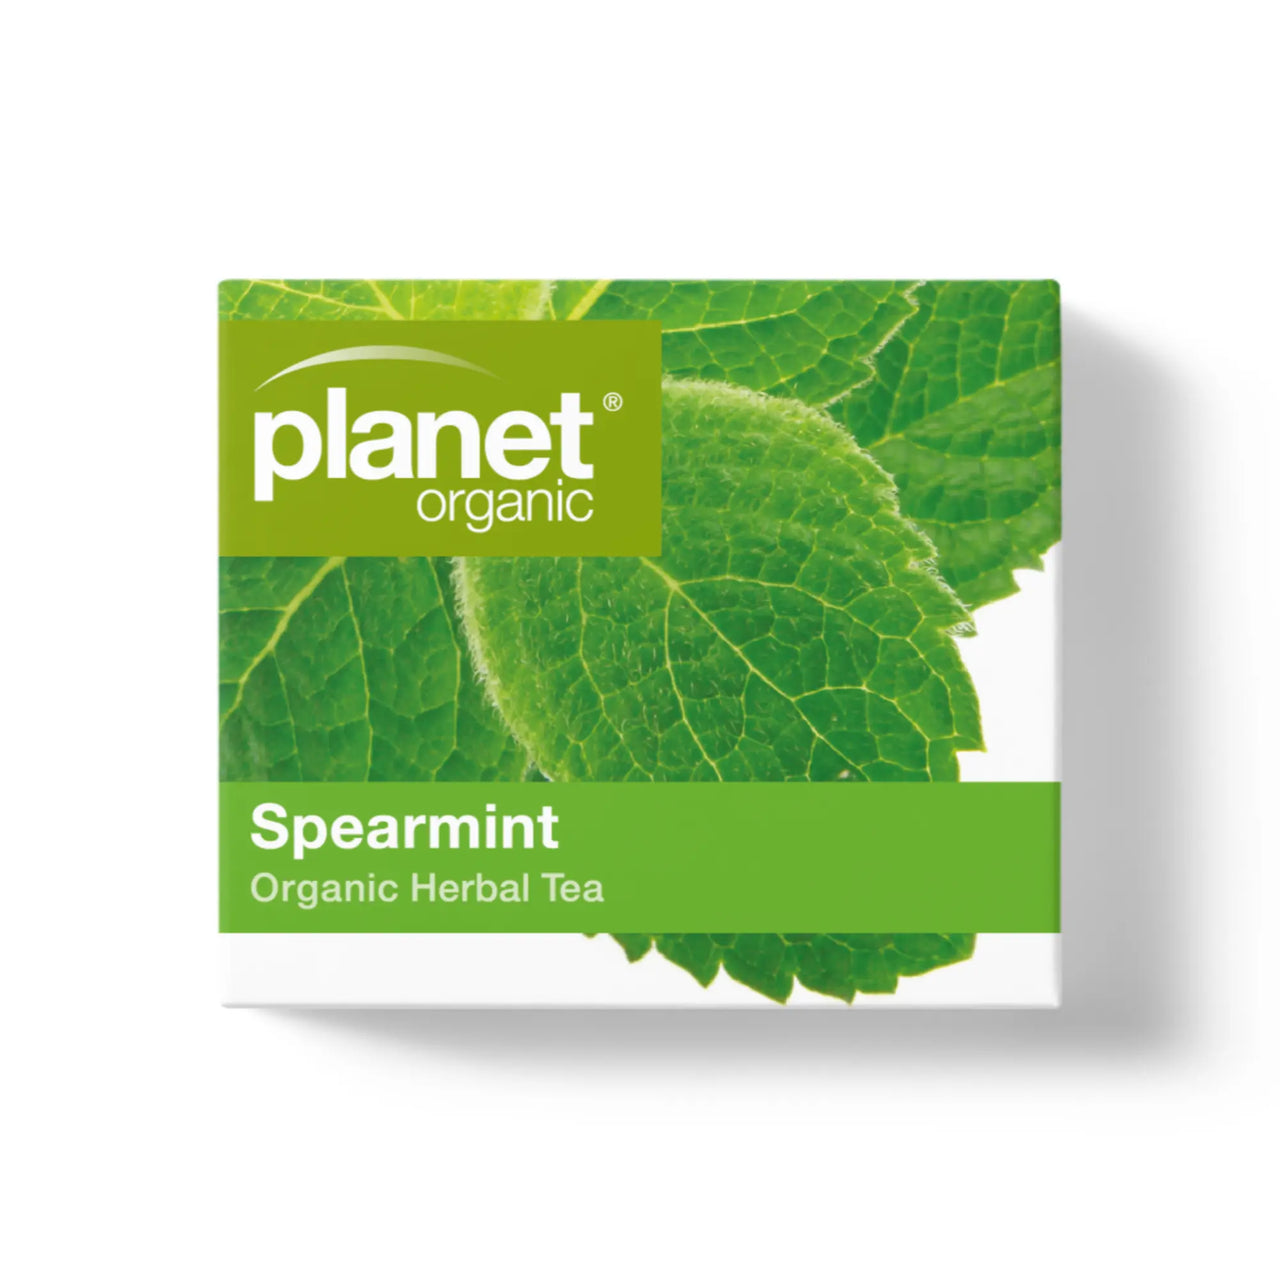 Certified Organic Spearmint Tea - Benefits